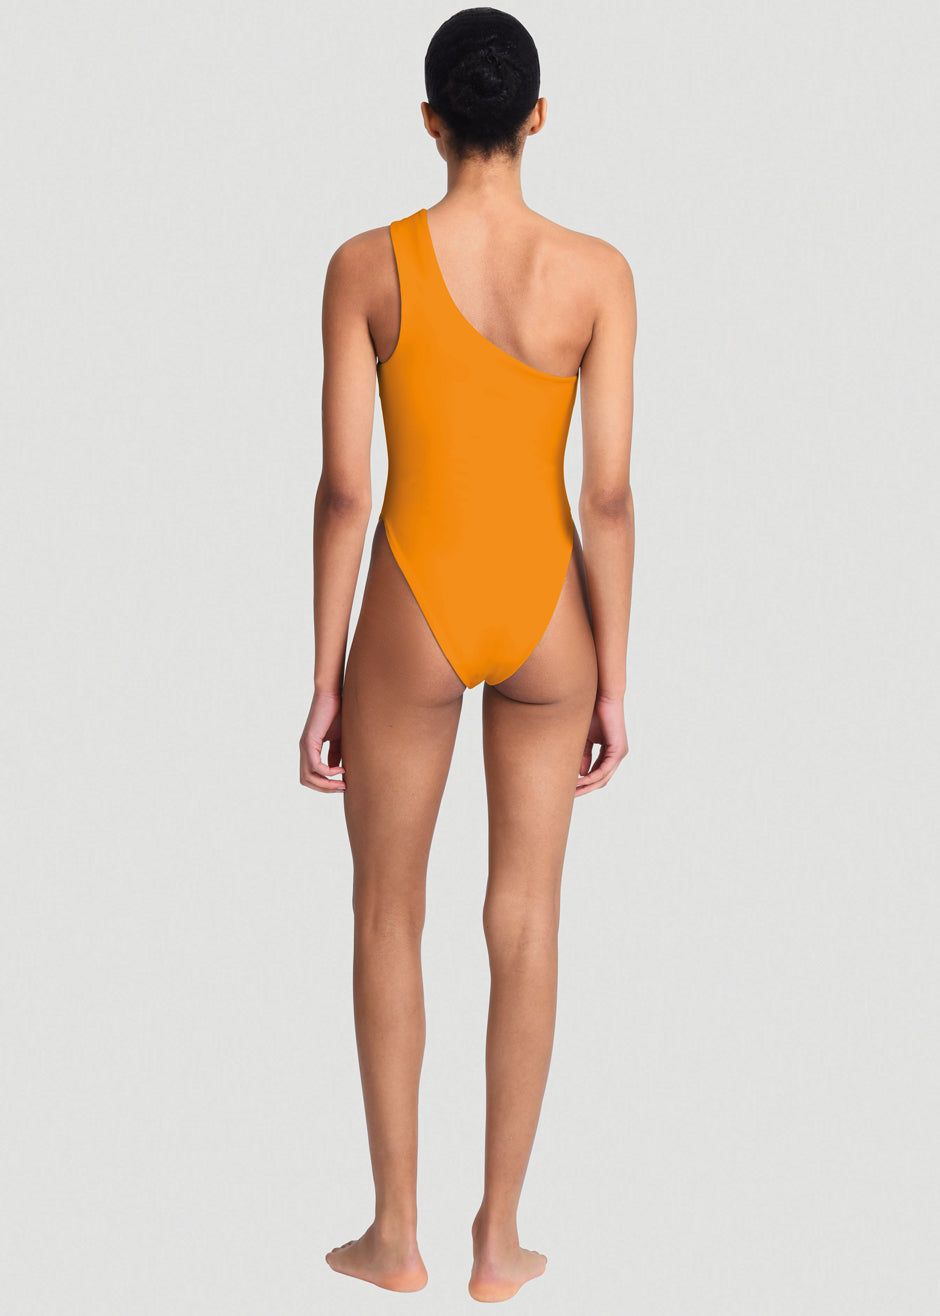 Aexae Knot One Piece Swimsuit - Orange - 2